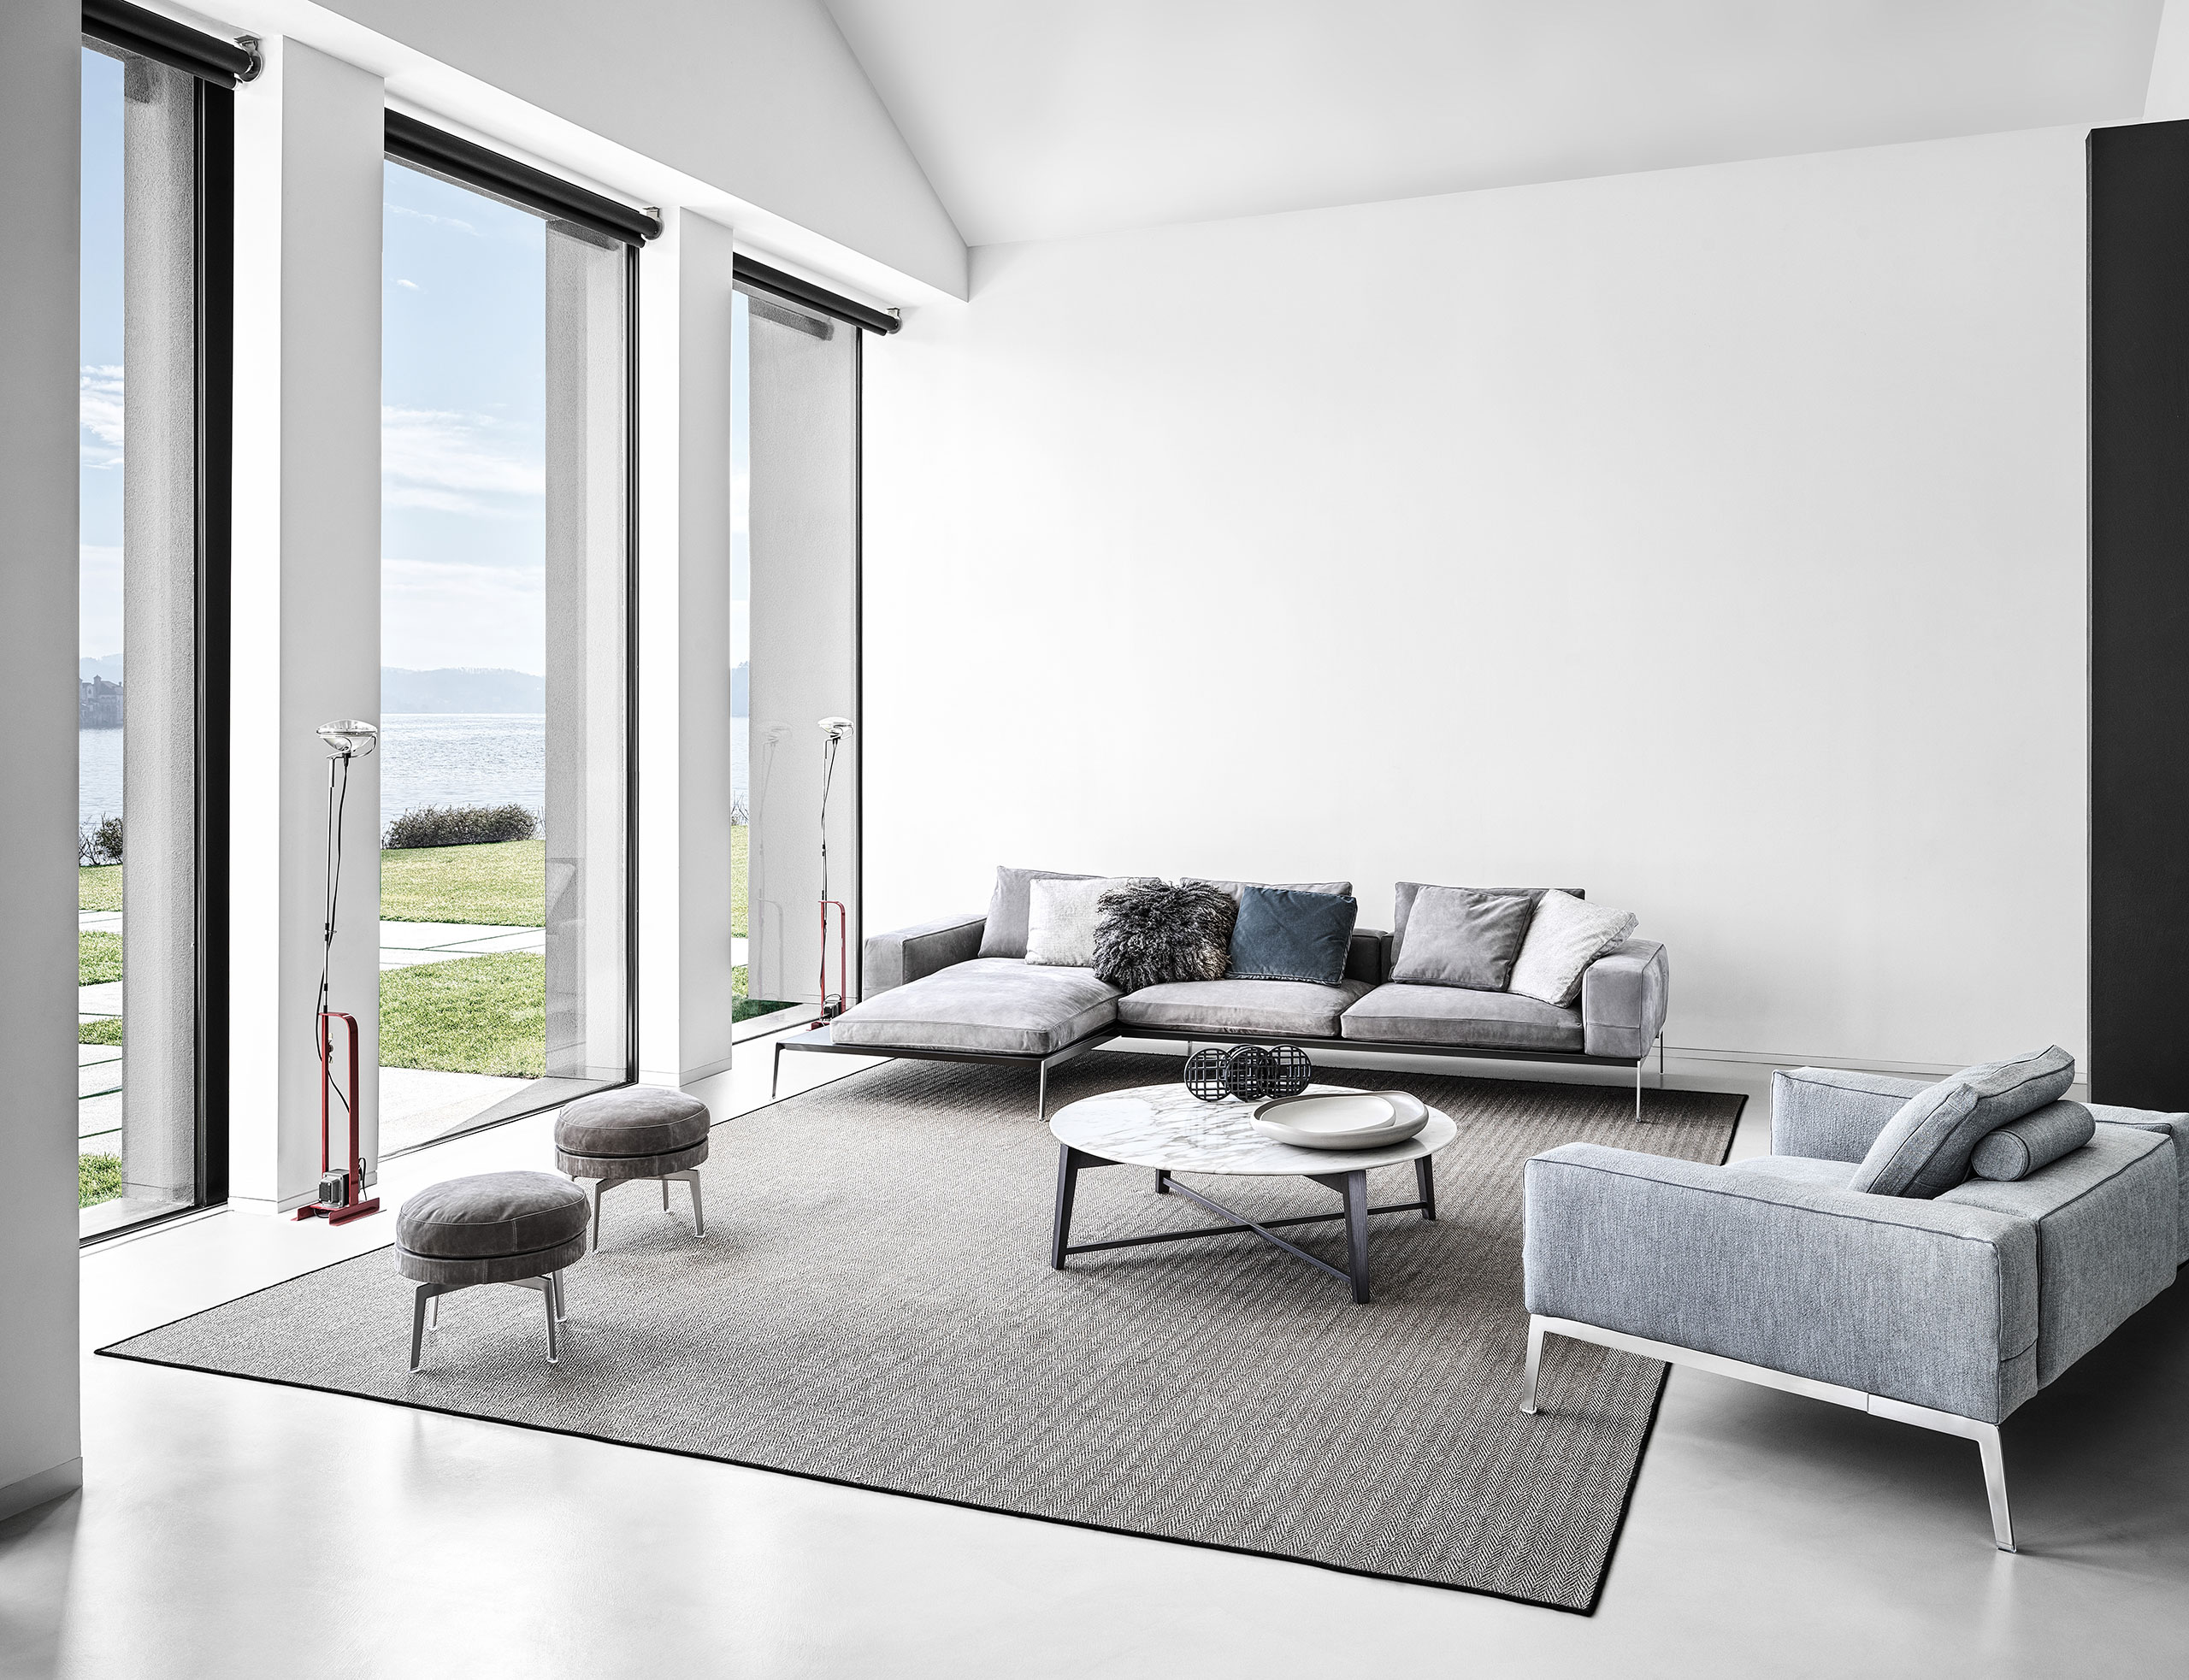 Lifesteel sofa by Antonio Citterio for Flexform. Photo © Flexform.